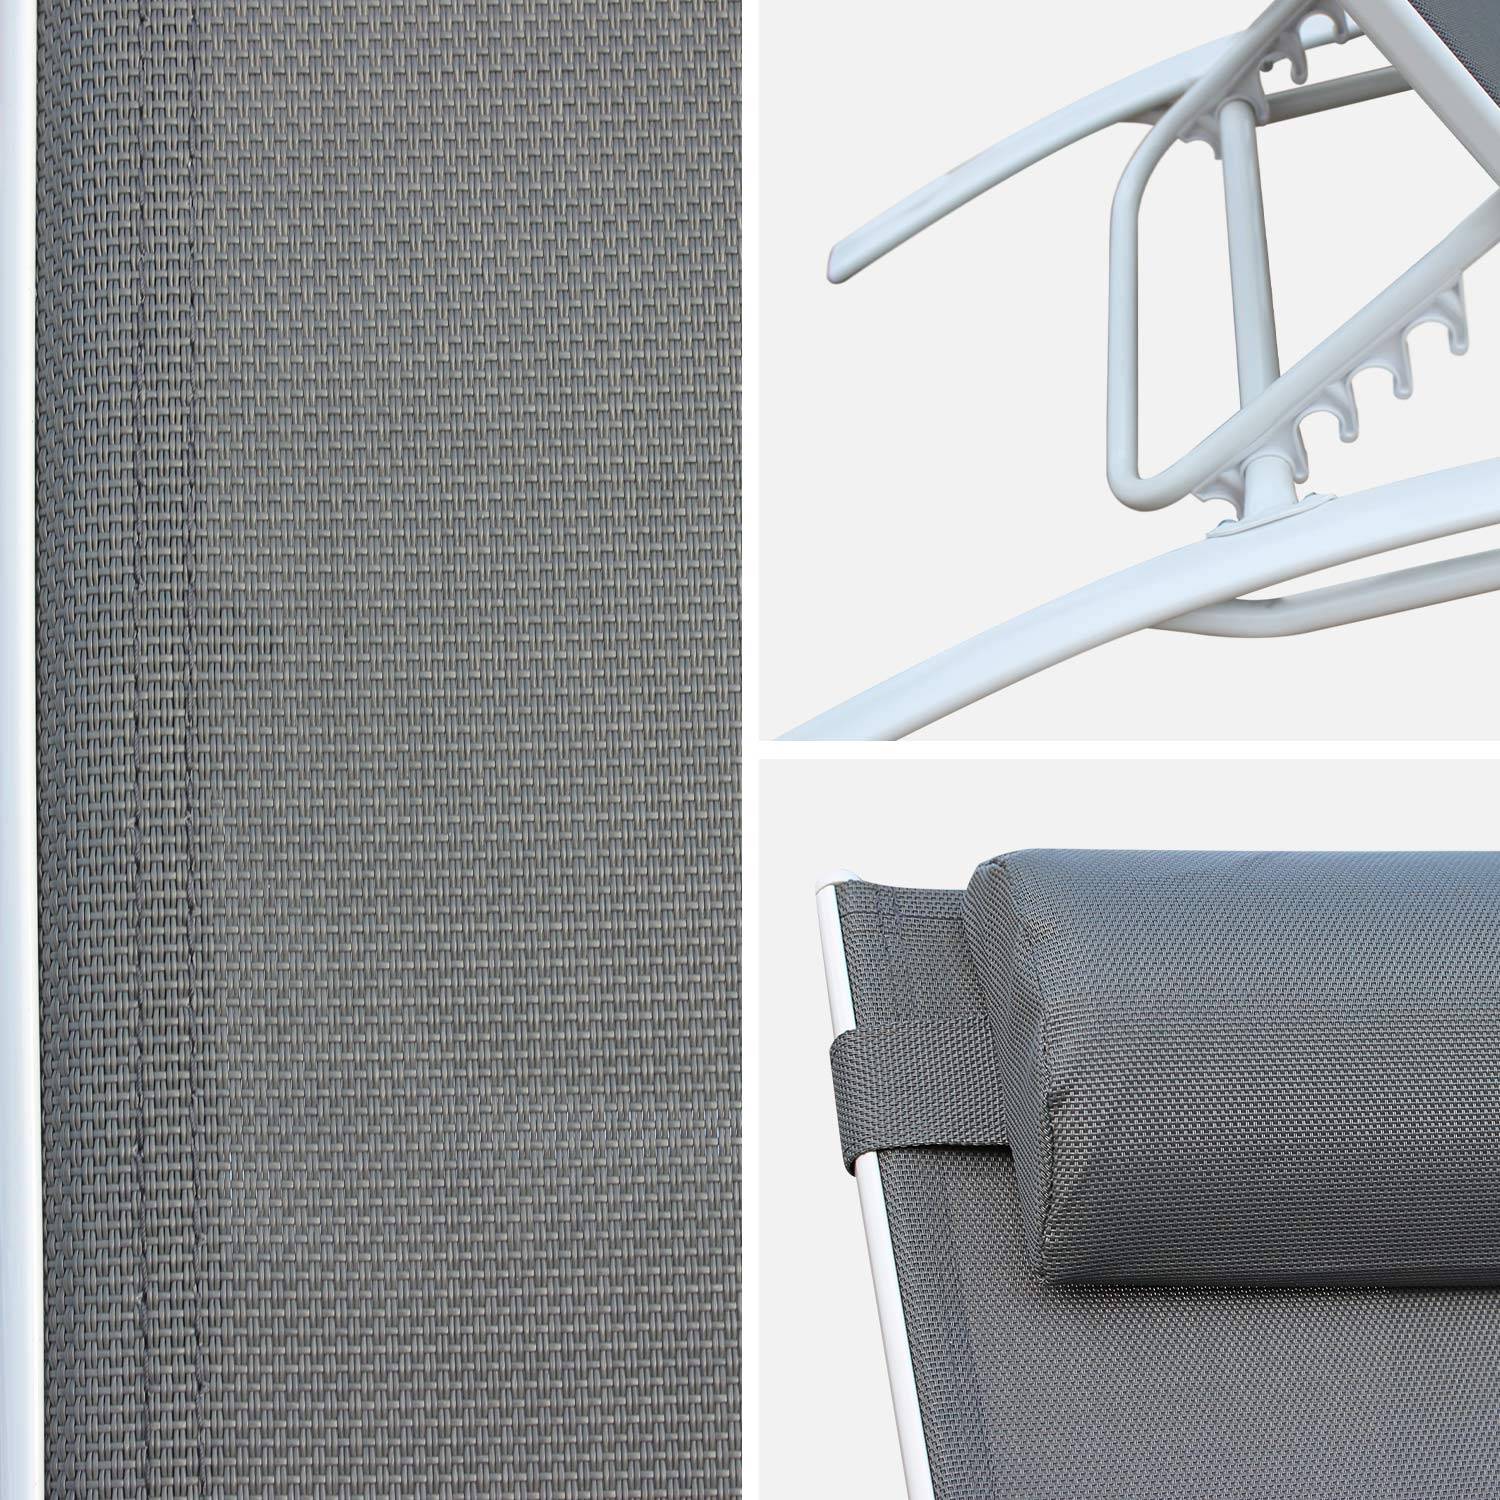 Tumbonas de aluminio blanco y textileno gris | Louisa x2,sweeek,Photo6